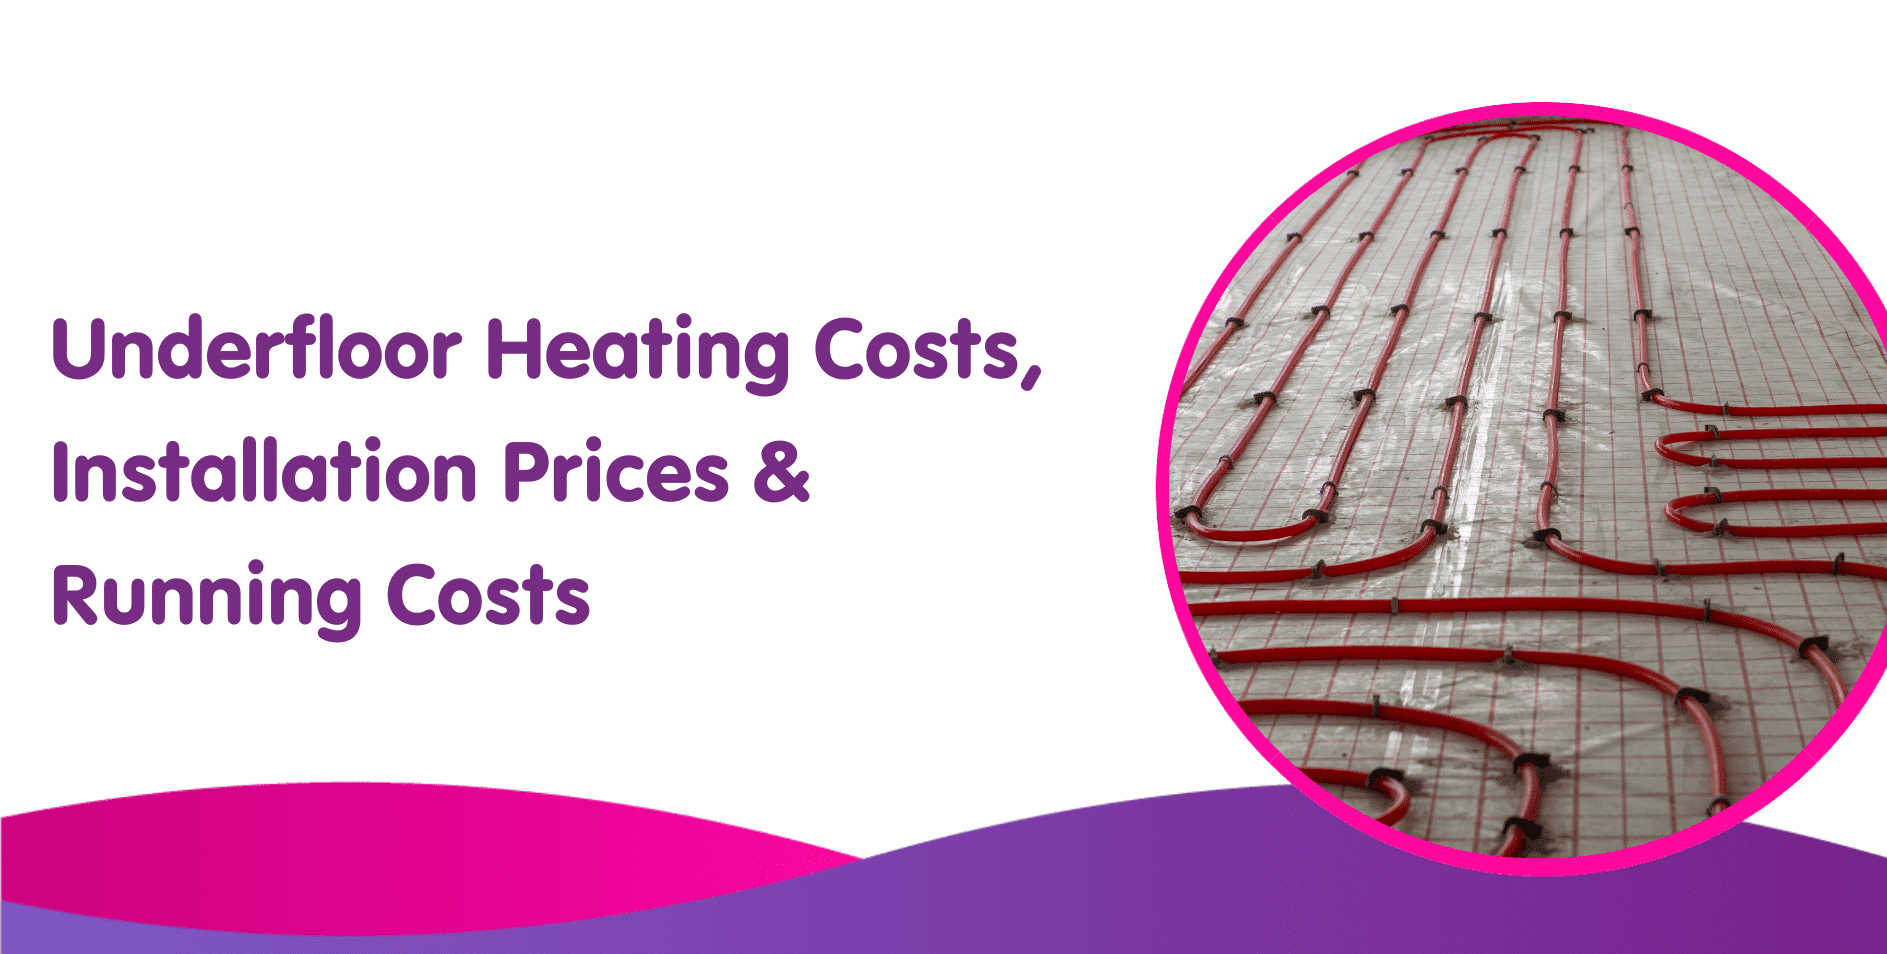 Underfloor Heating Costs, Installation Prices & Running Costs